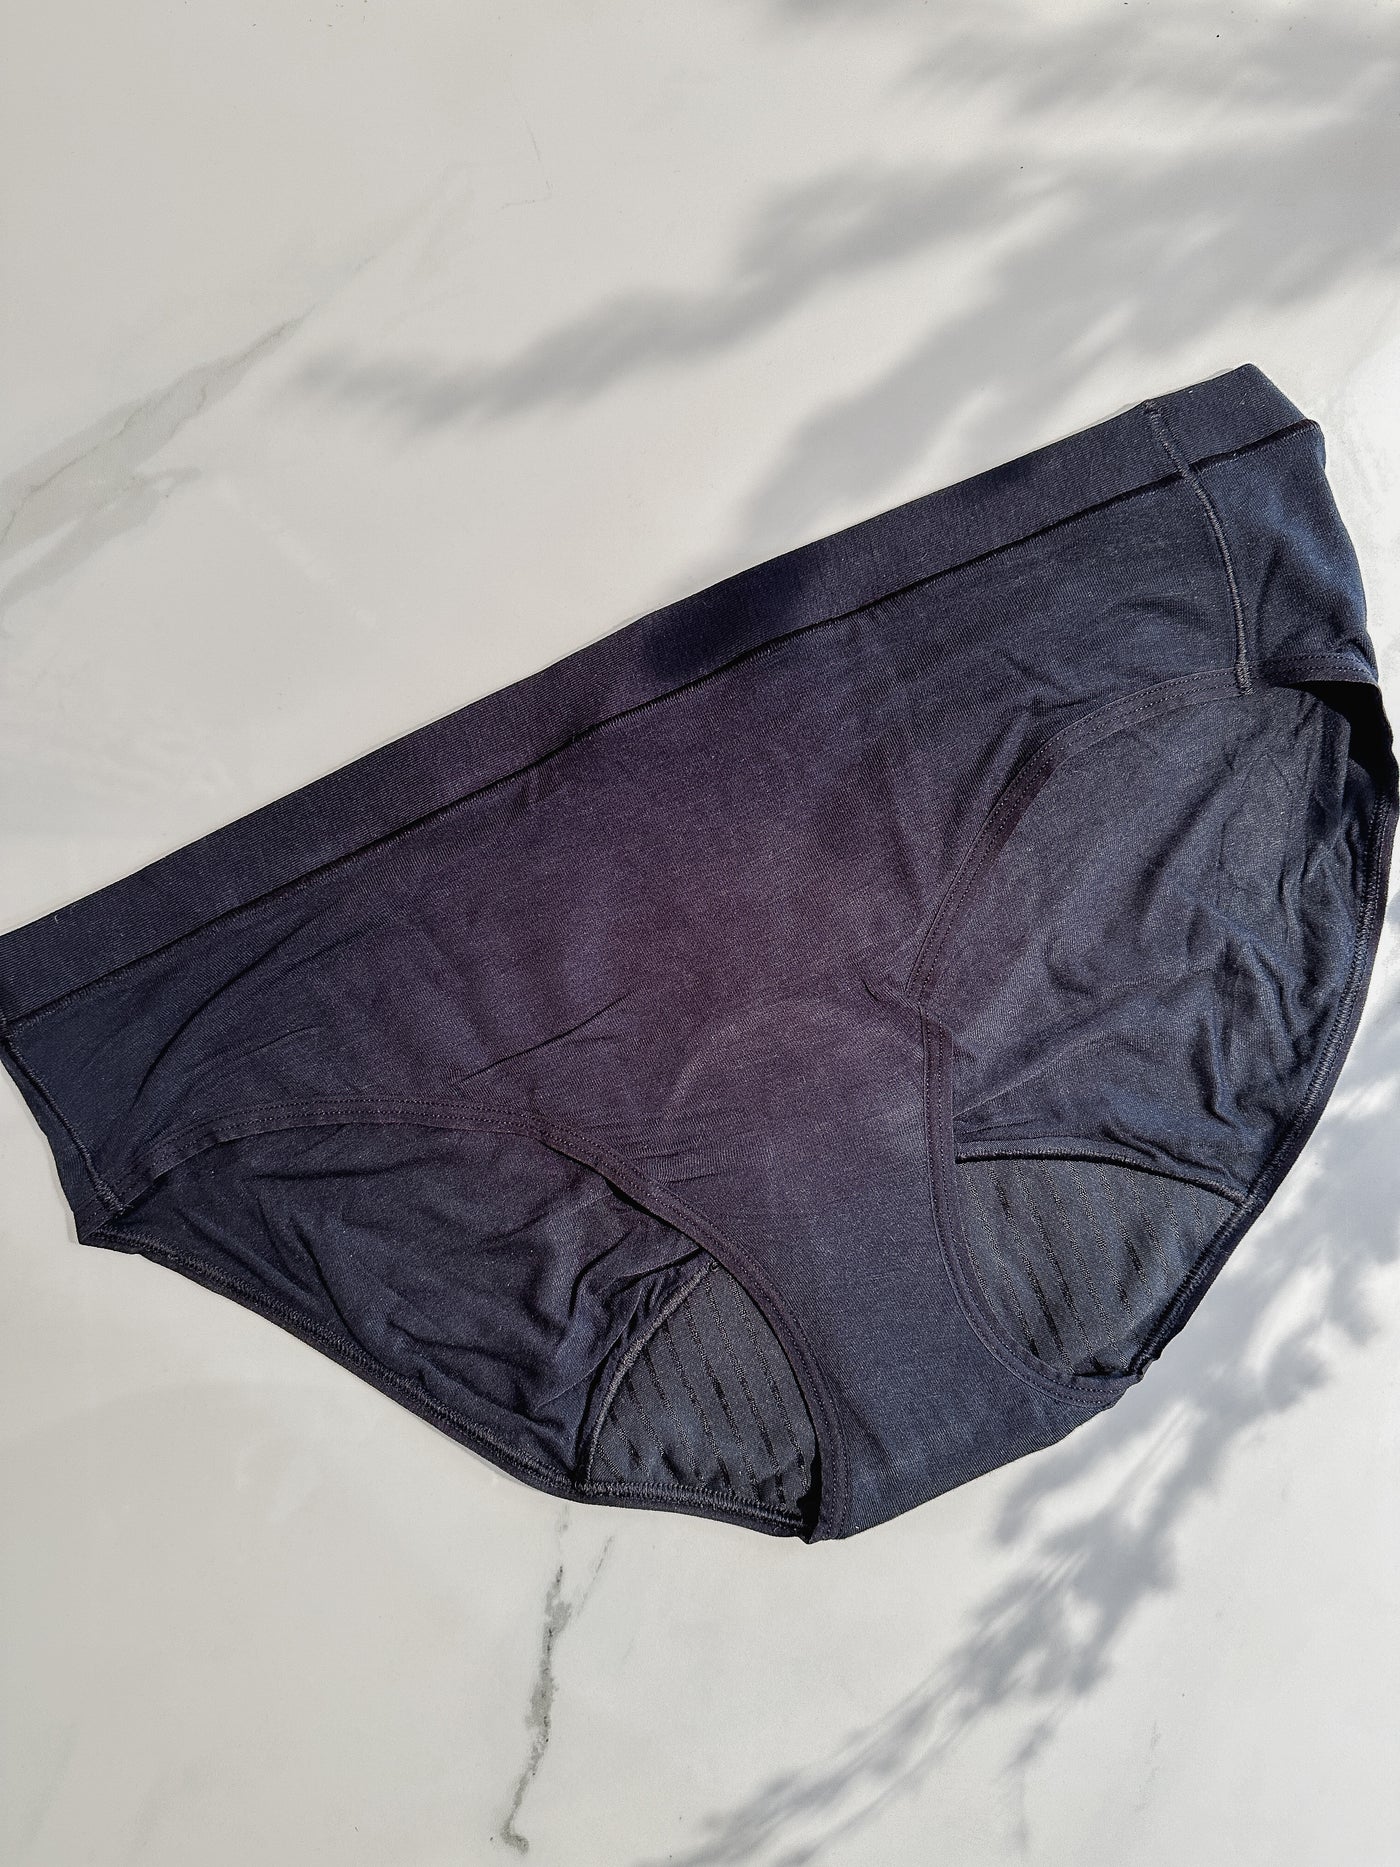 Saalt Menstrual Underwear - Brief - Simple Good